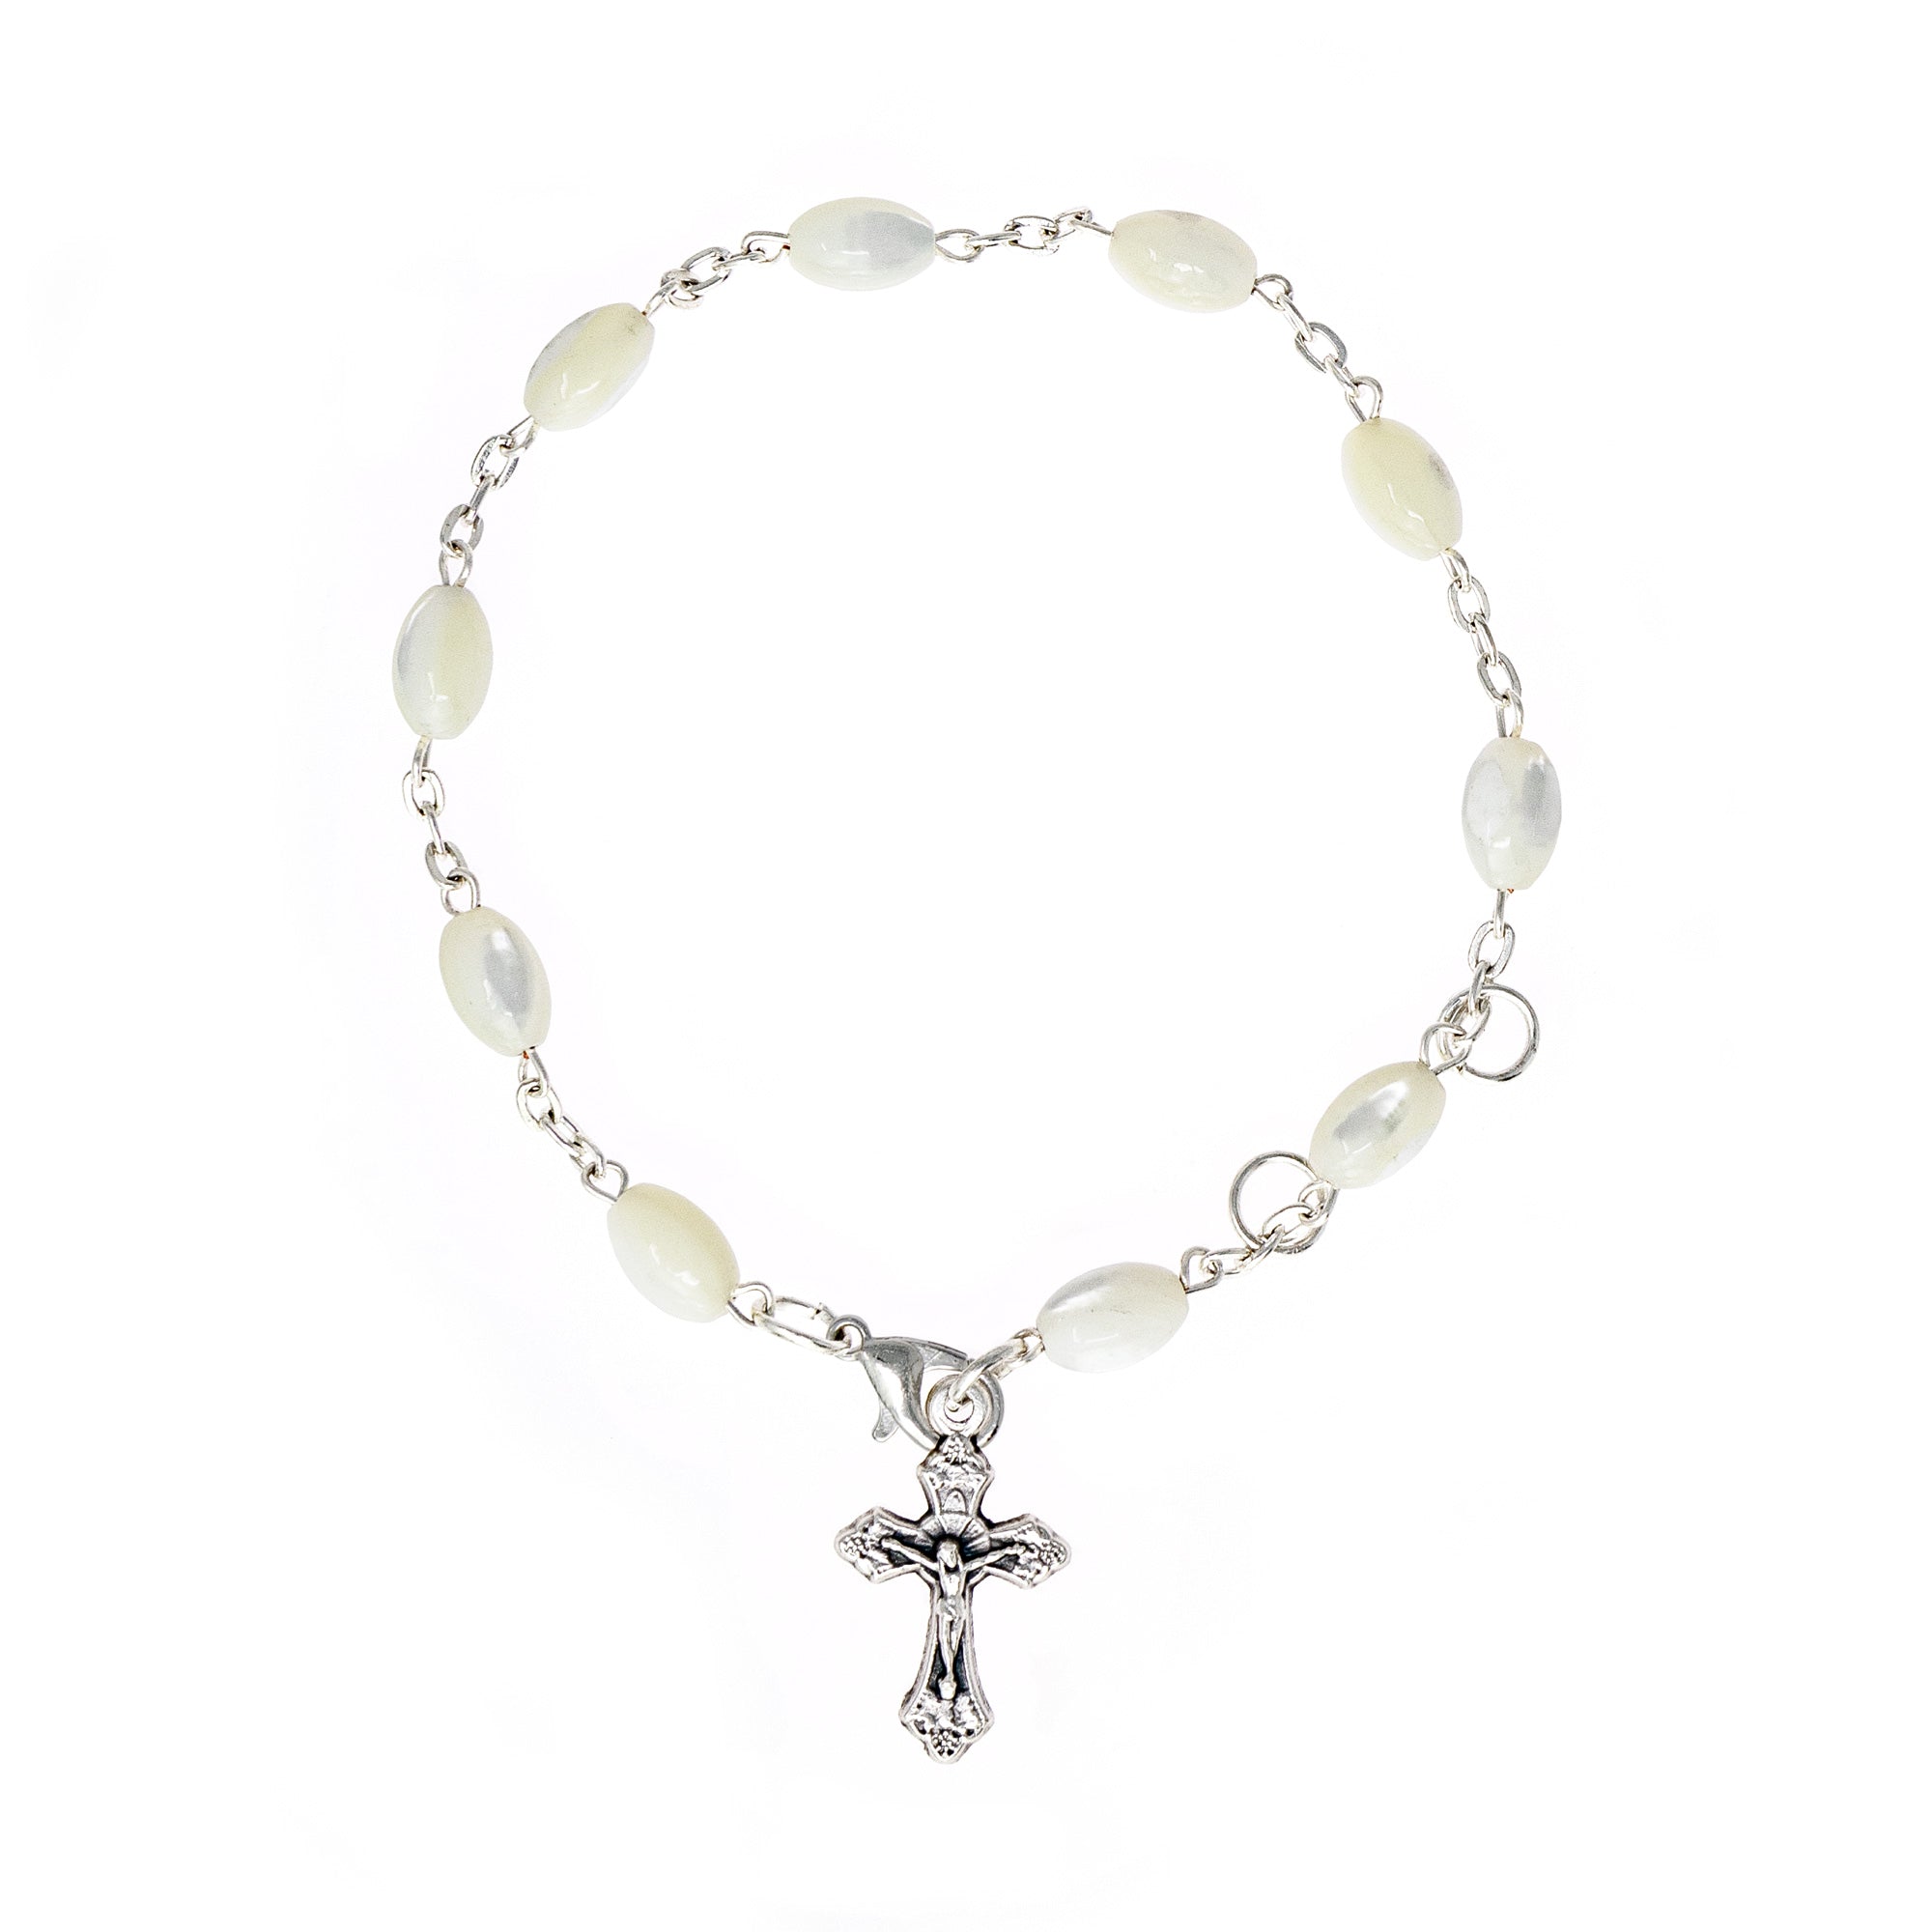 Buy Catholic Girls First Communion Rosary Bracelet, 7 Inch at Amazon.in